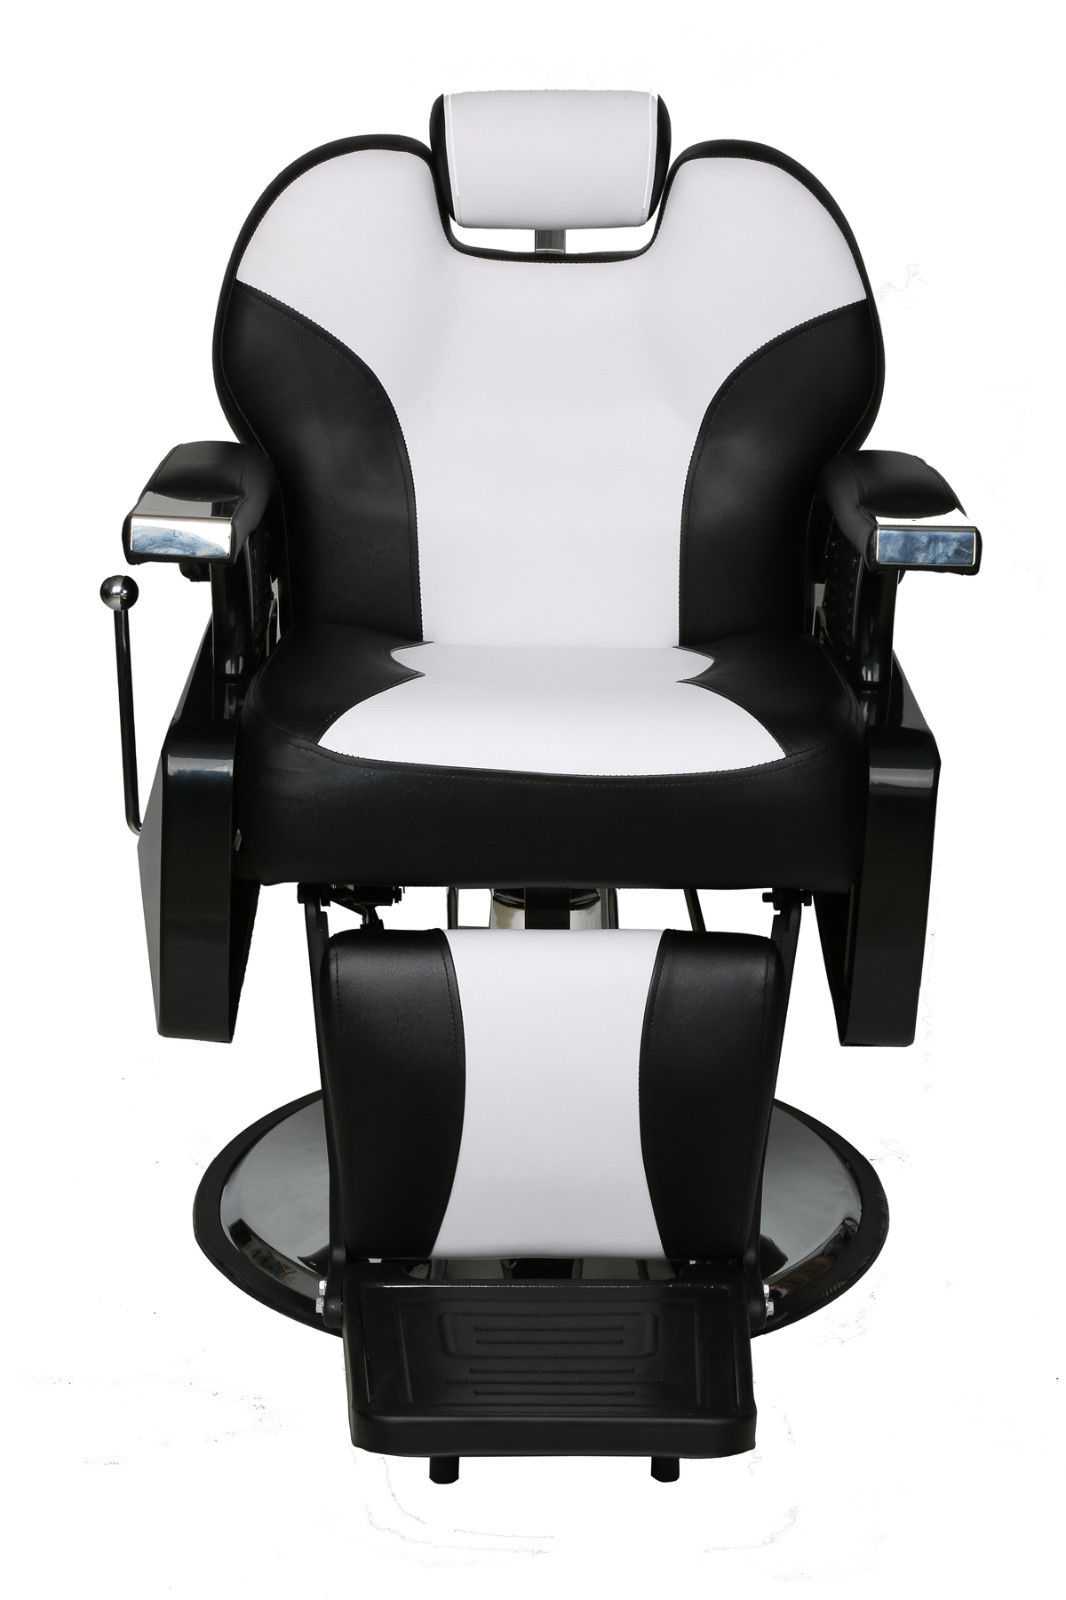 BarberPub All Purpose Hydraulic Barber Chair Salon Beauty Chair 2687 White&Black